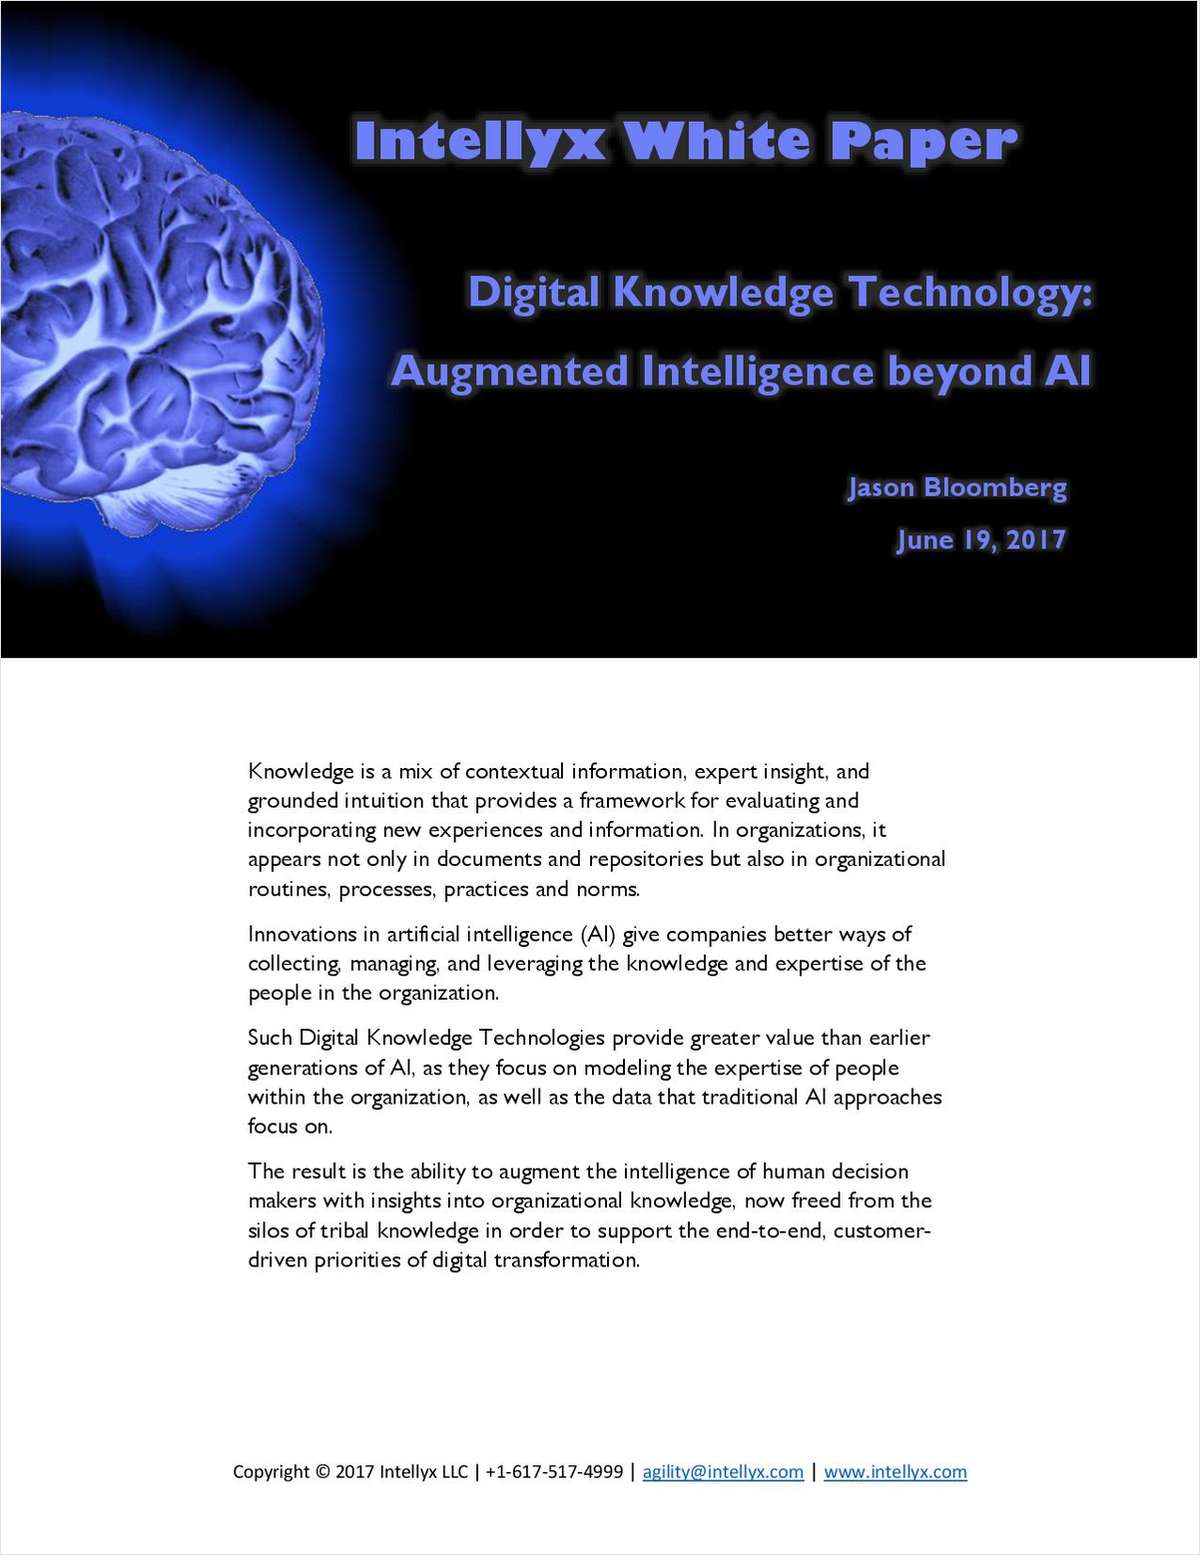 Intellyx: Digital Knowledge Technology: Augmented Intelligence beyond AI